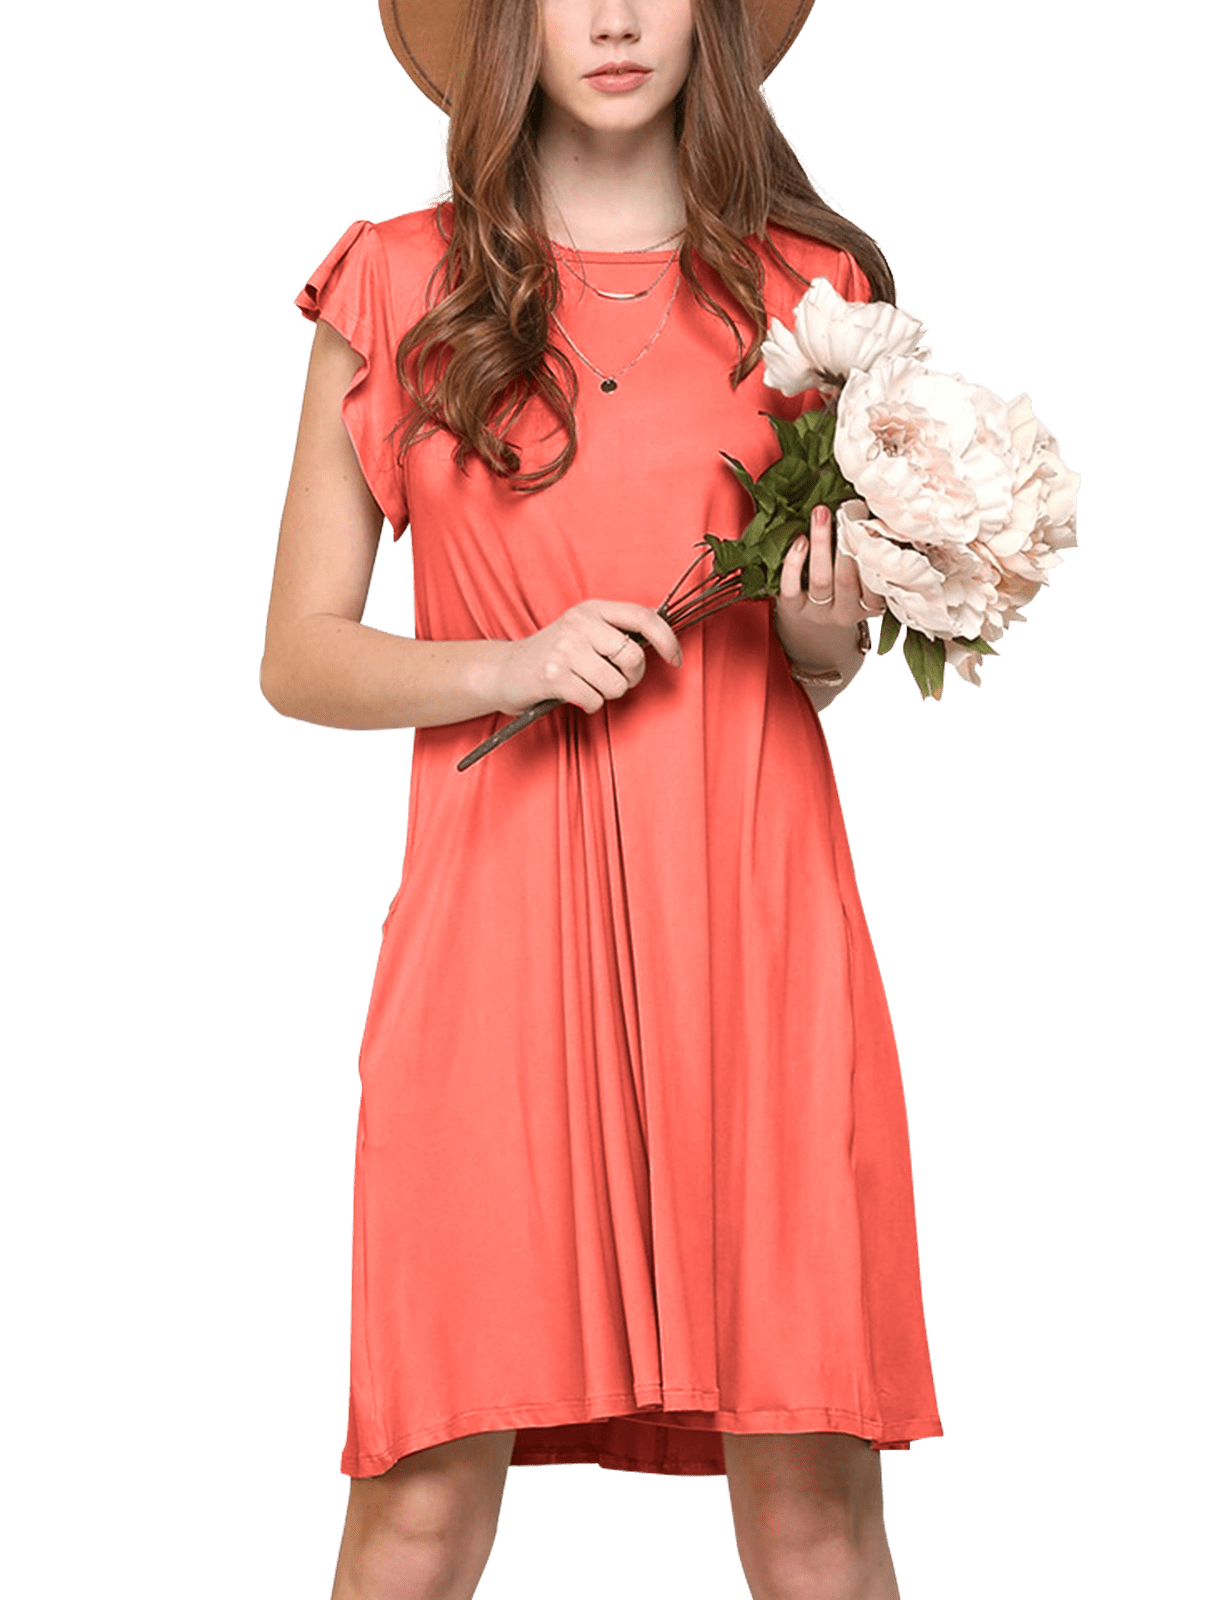 Doublju Women's Ruffle Cap Sleeve Flare Mini Dress - Walmart.com